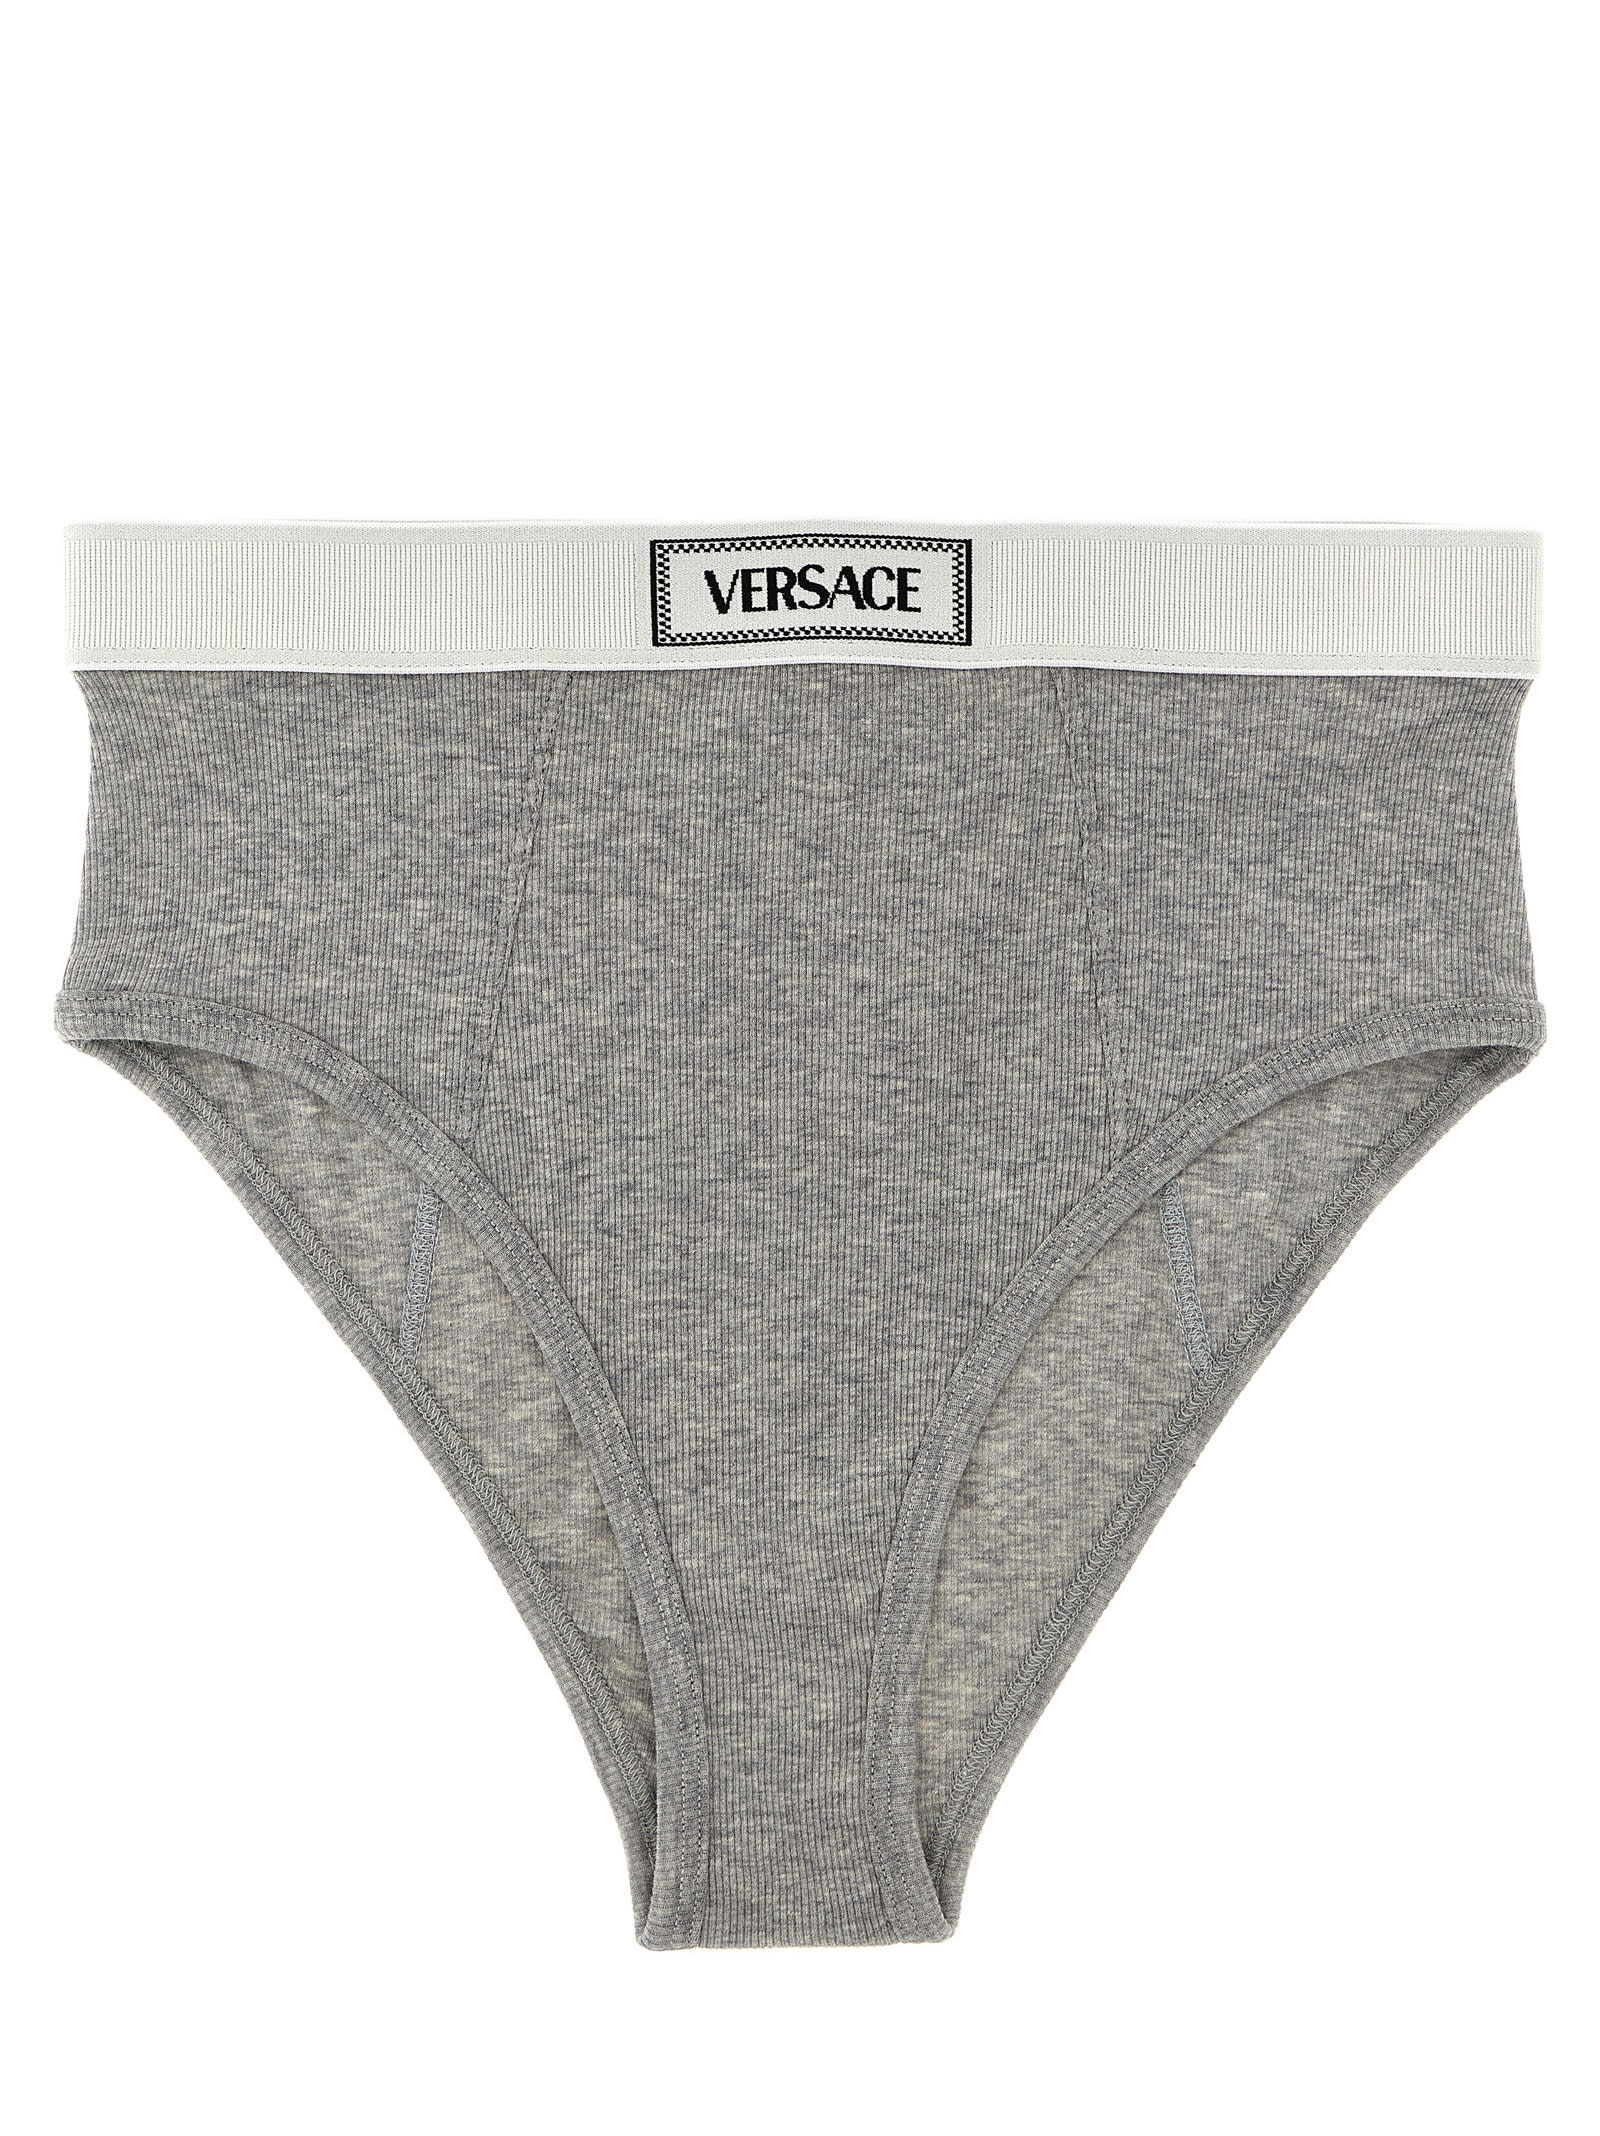 Versace 90s Vintage Briefs